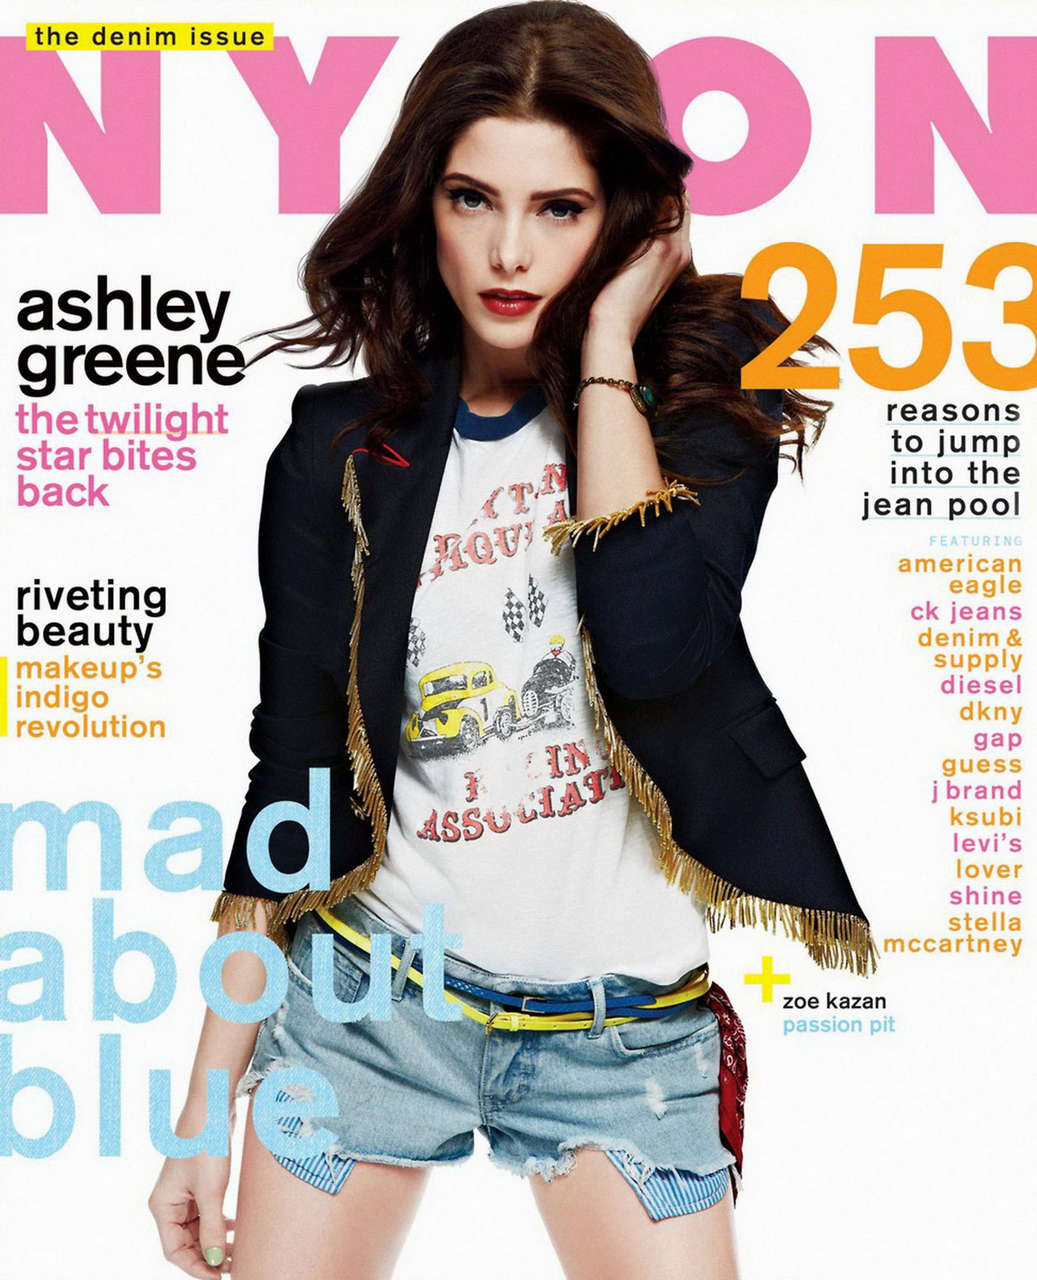 Ashley Greene Nylon Magazine August 2012 Issue